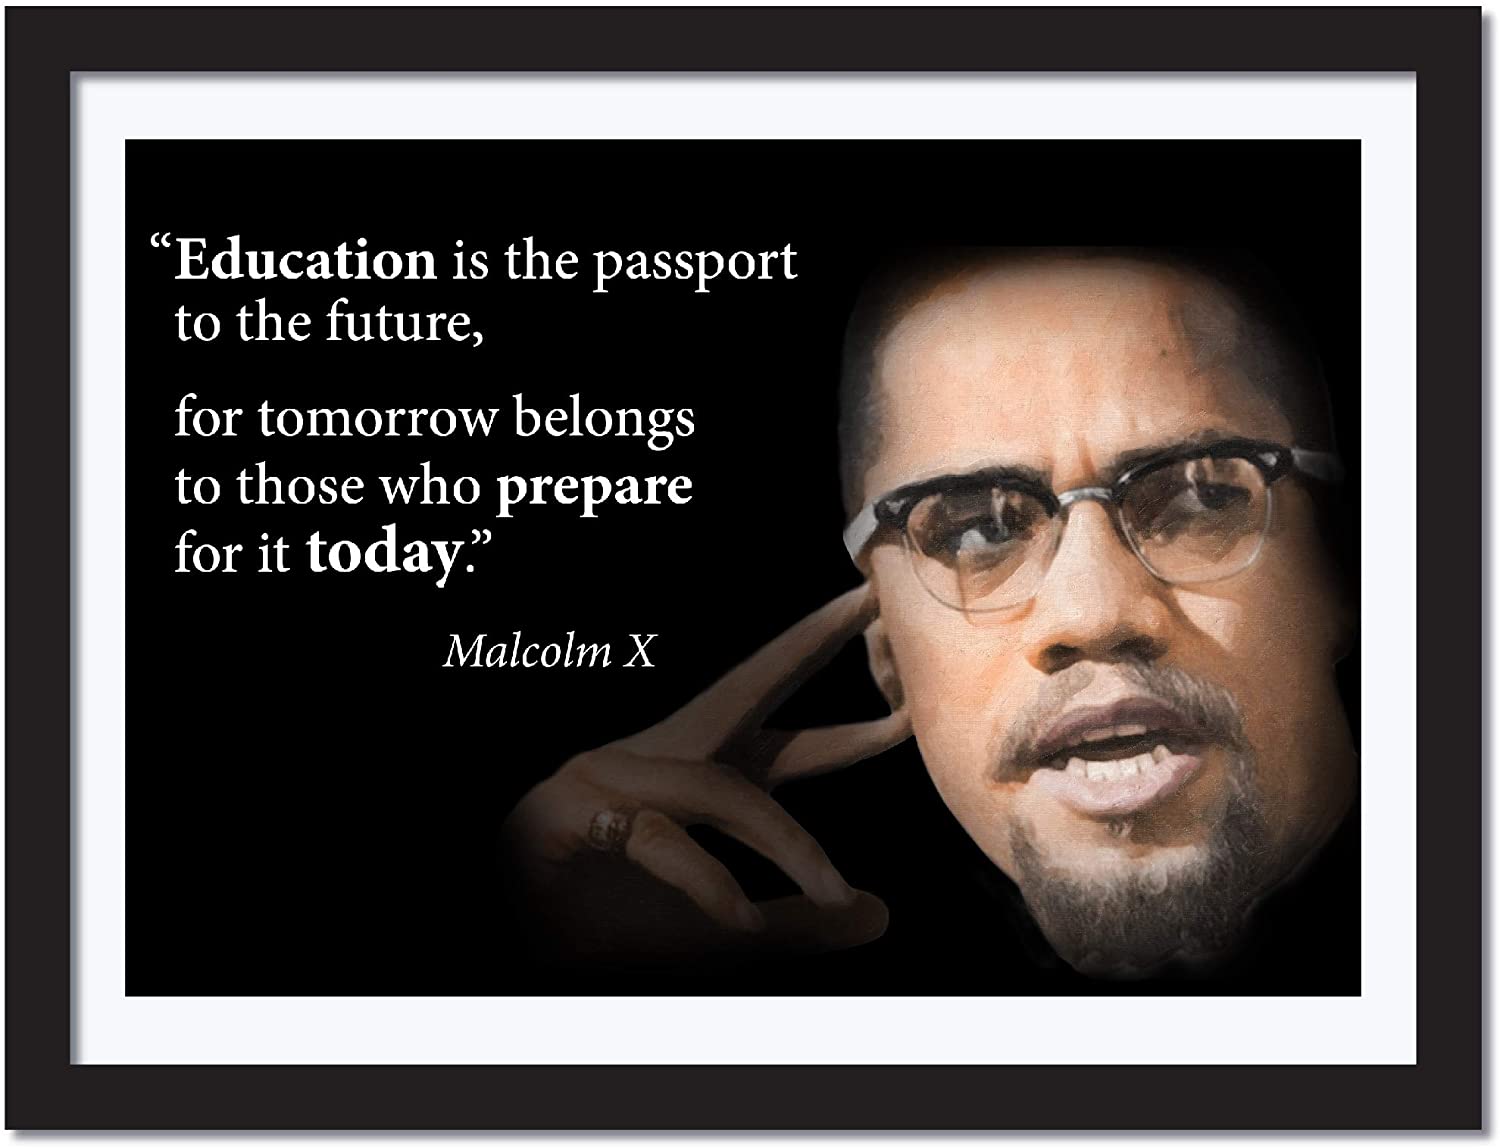 Malcolm X. Courtesy of https://hiphopun.com/entertainment/slain-civil-rights-leader-malcolm-x-turns-95/